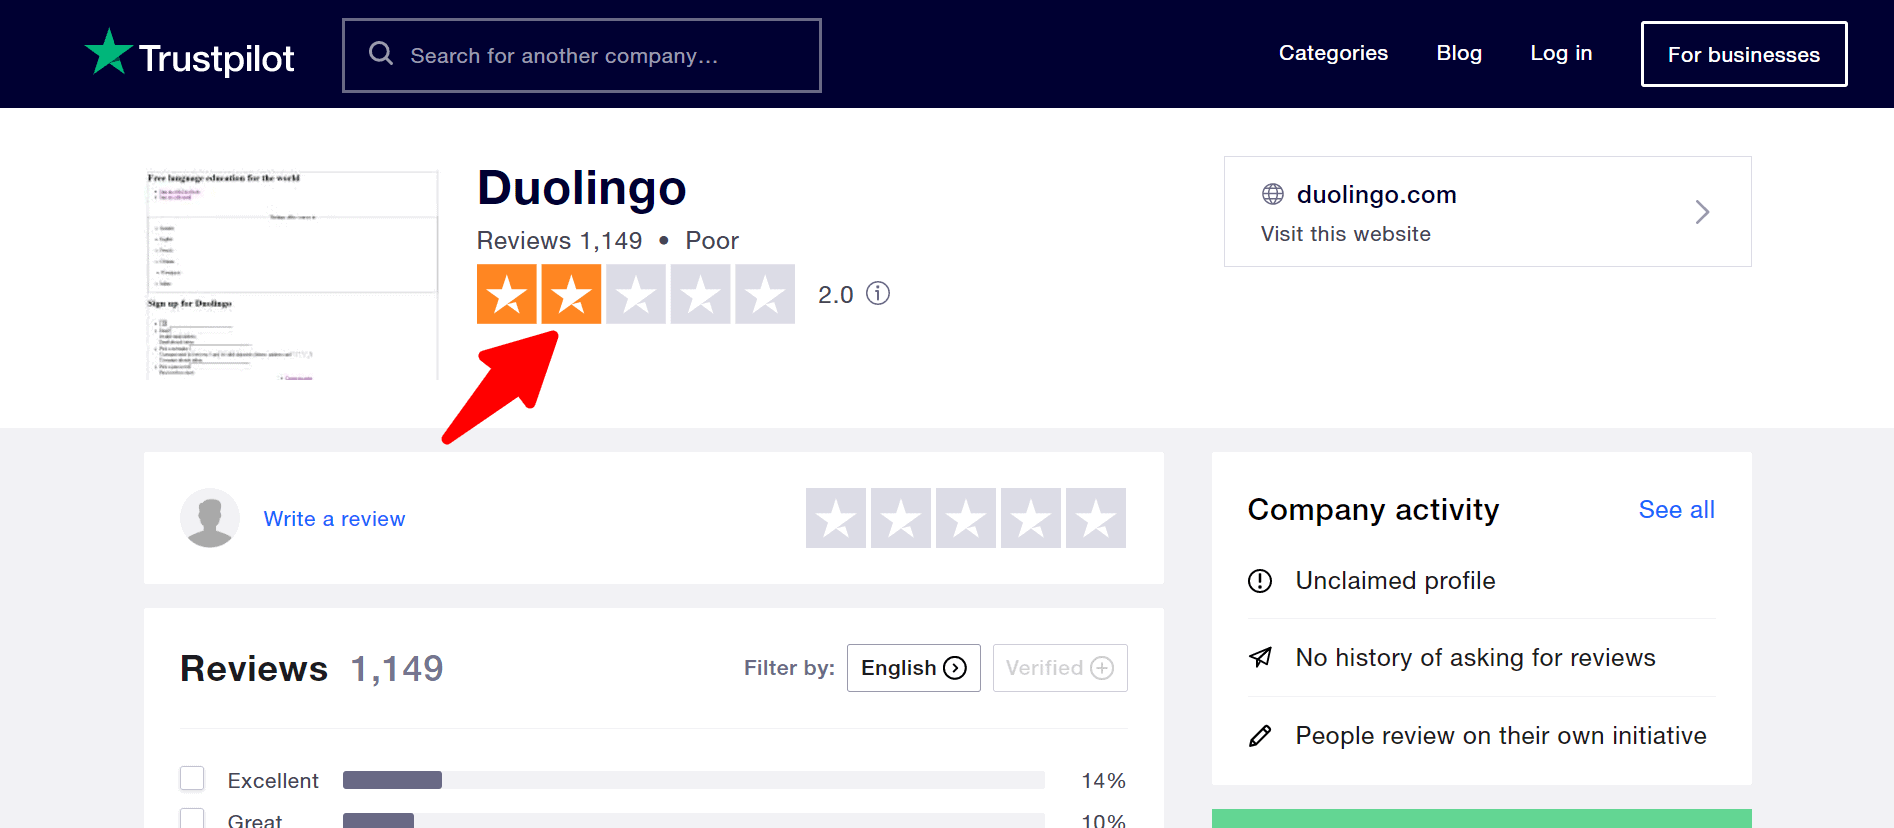 Duolingo Customer Reviews on Trustpilot